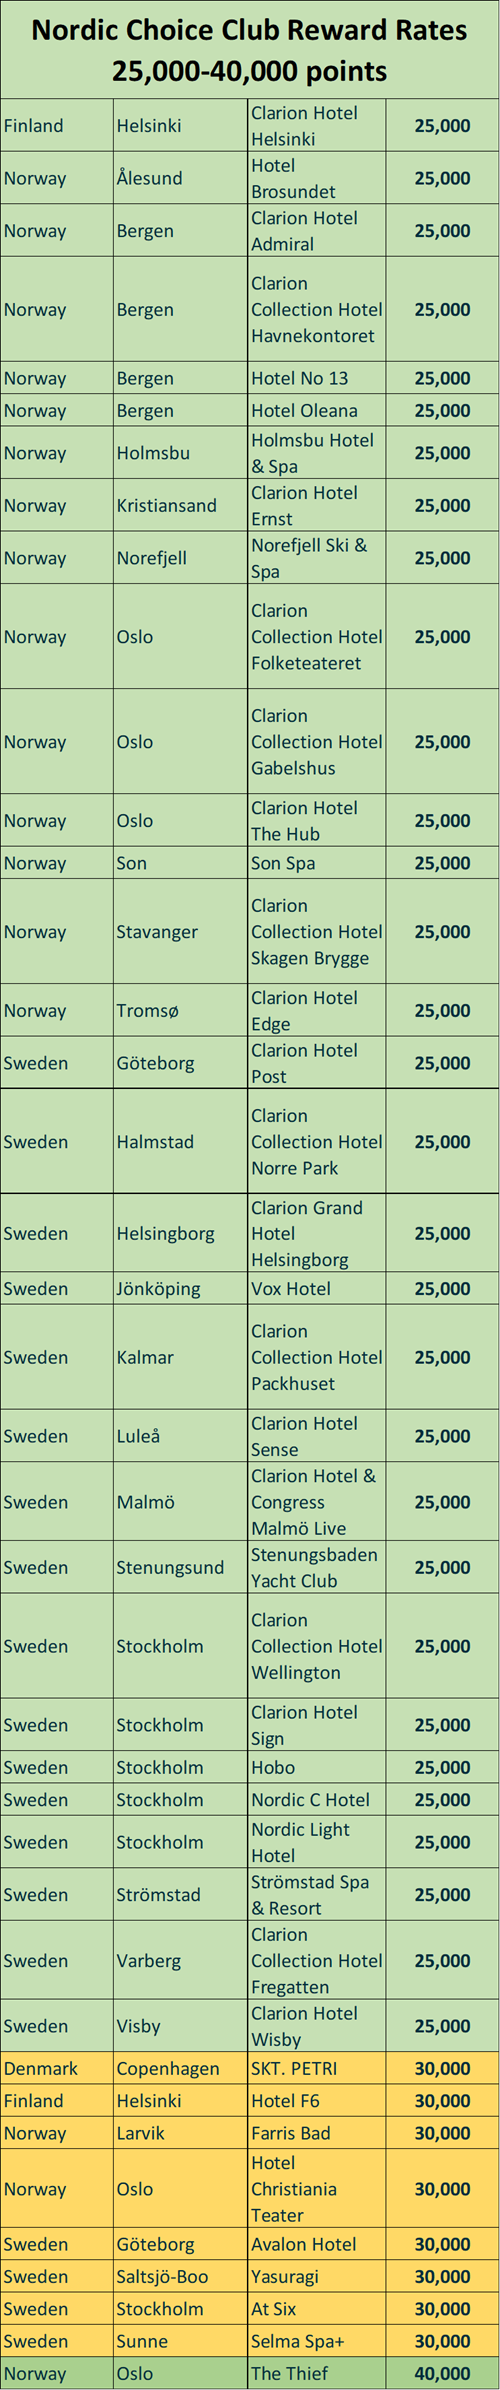 Nordic Choice 25-40K hotels